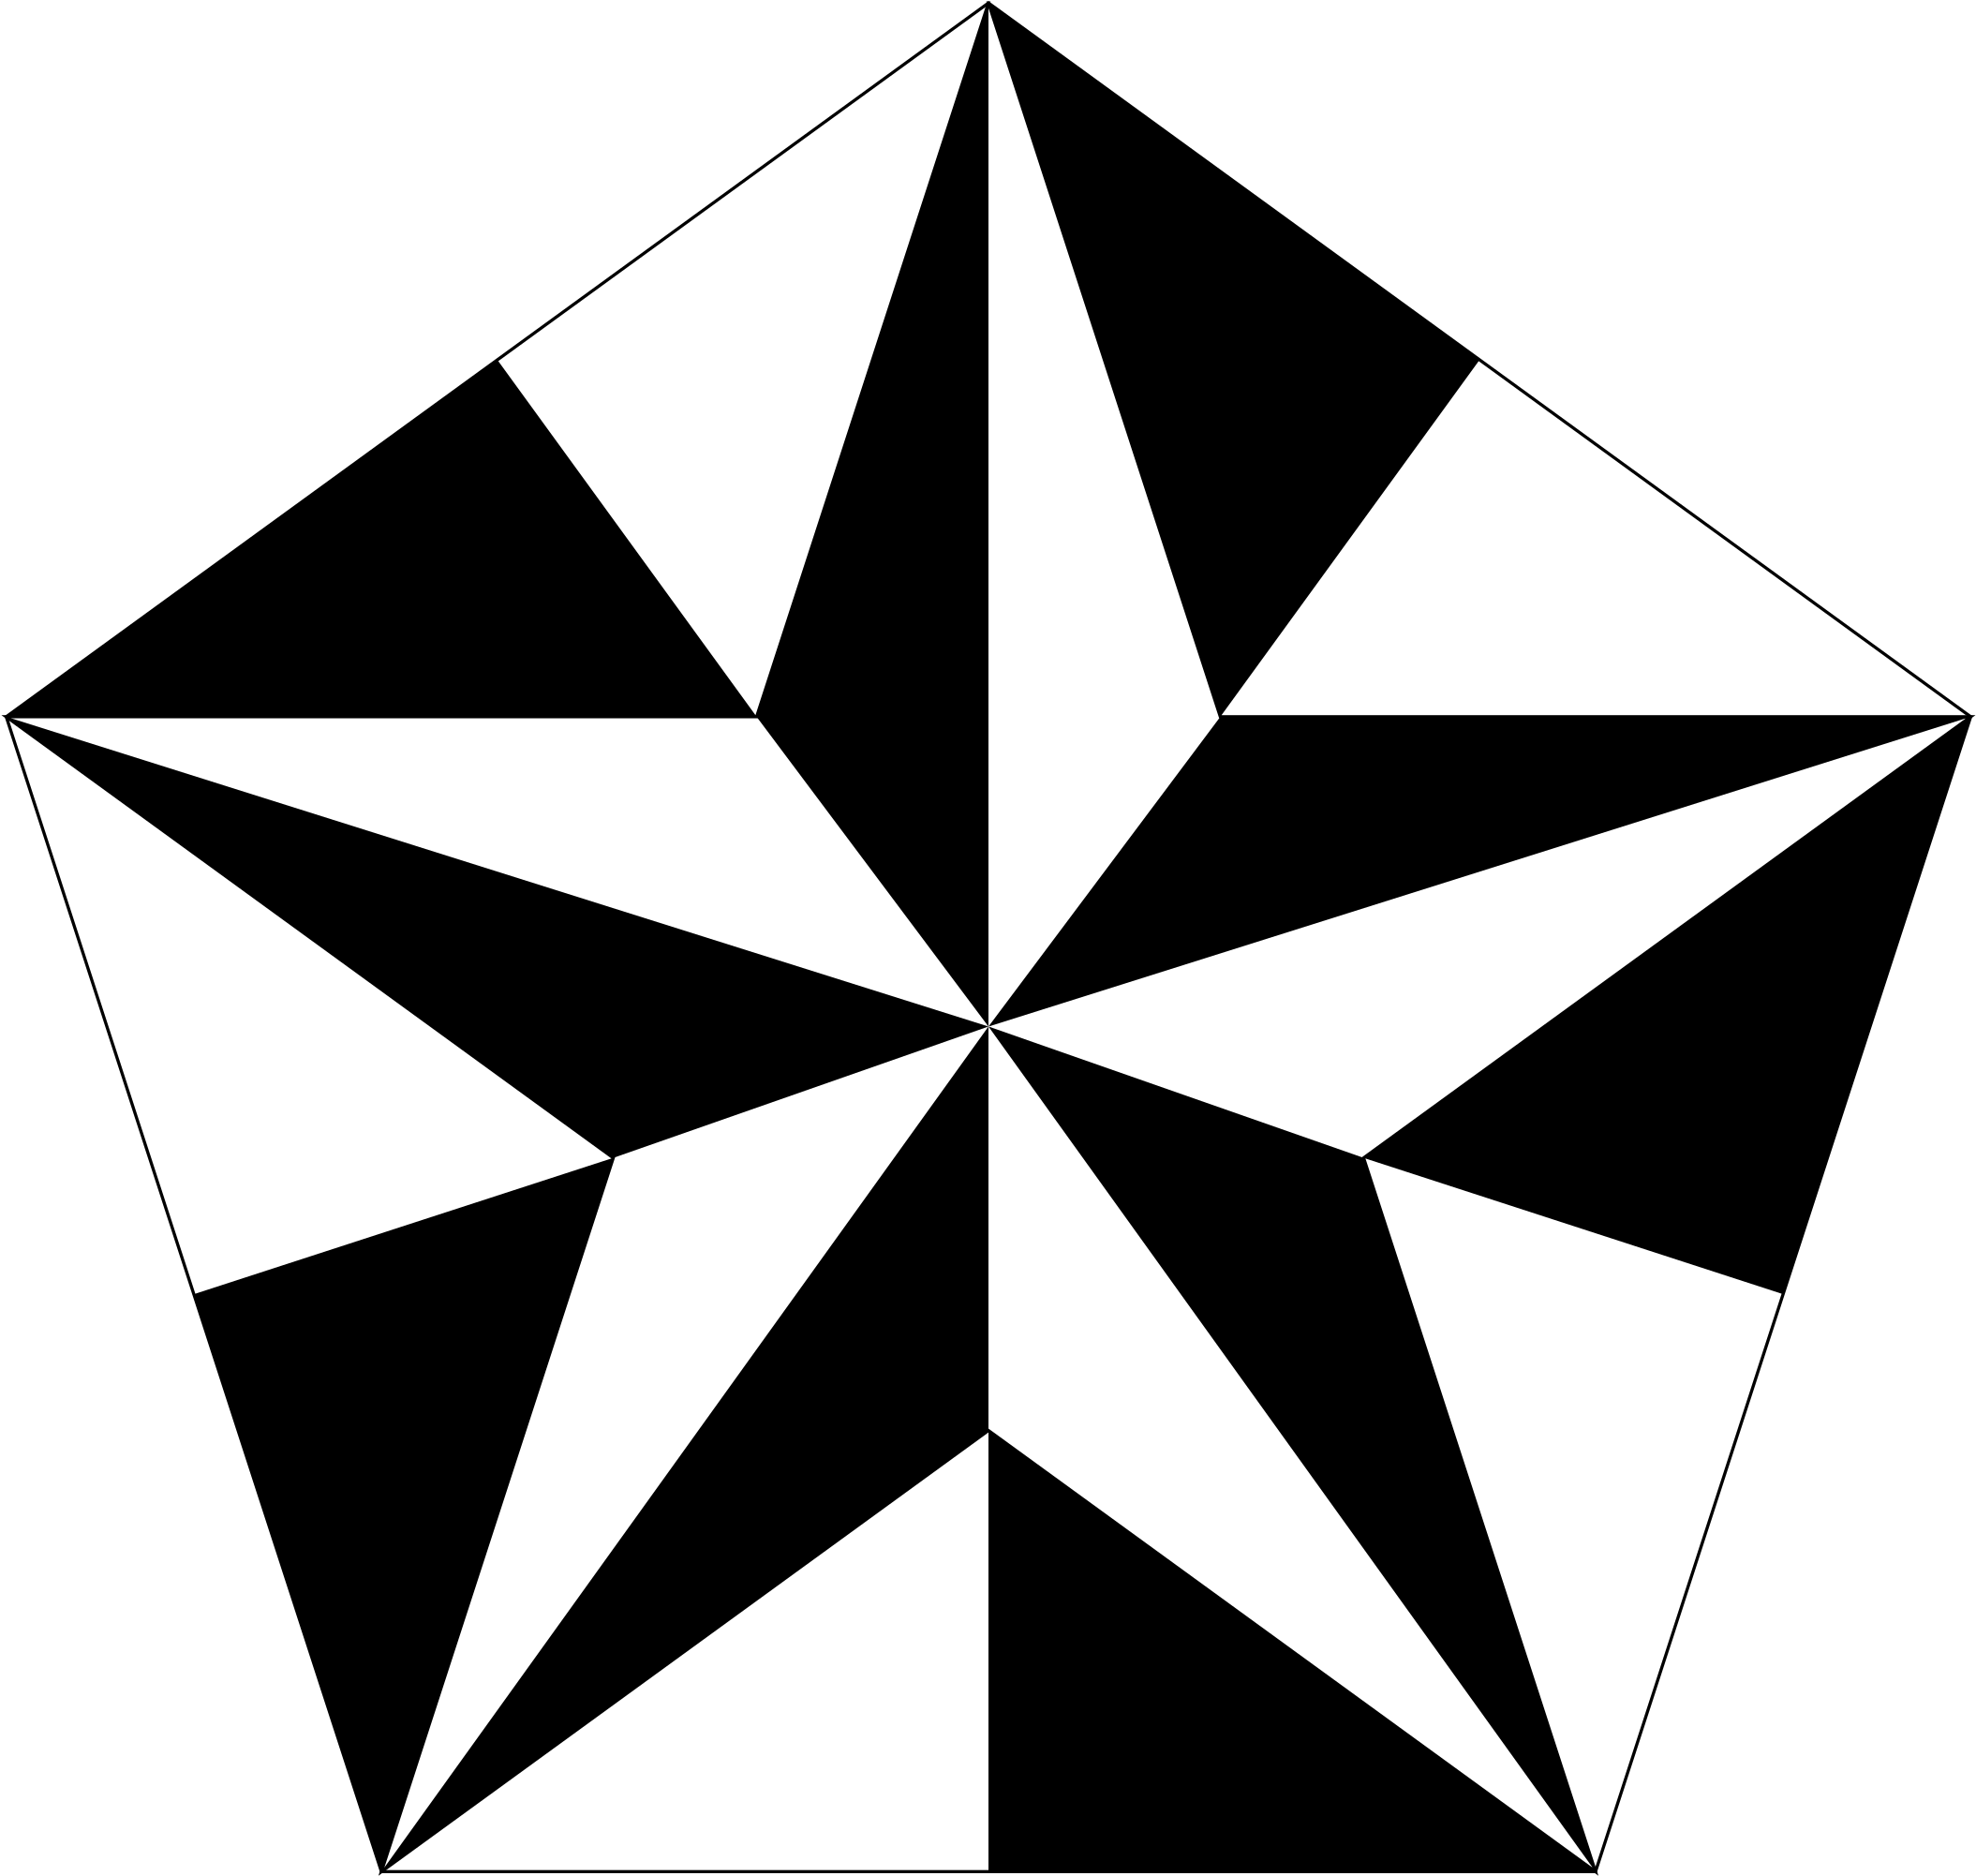 Pentagon - Clipart - رسم هندسي ابيض واسود (2400x2400)